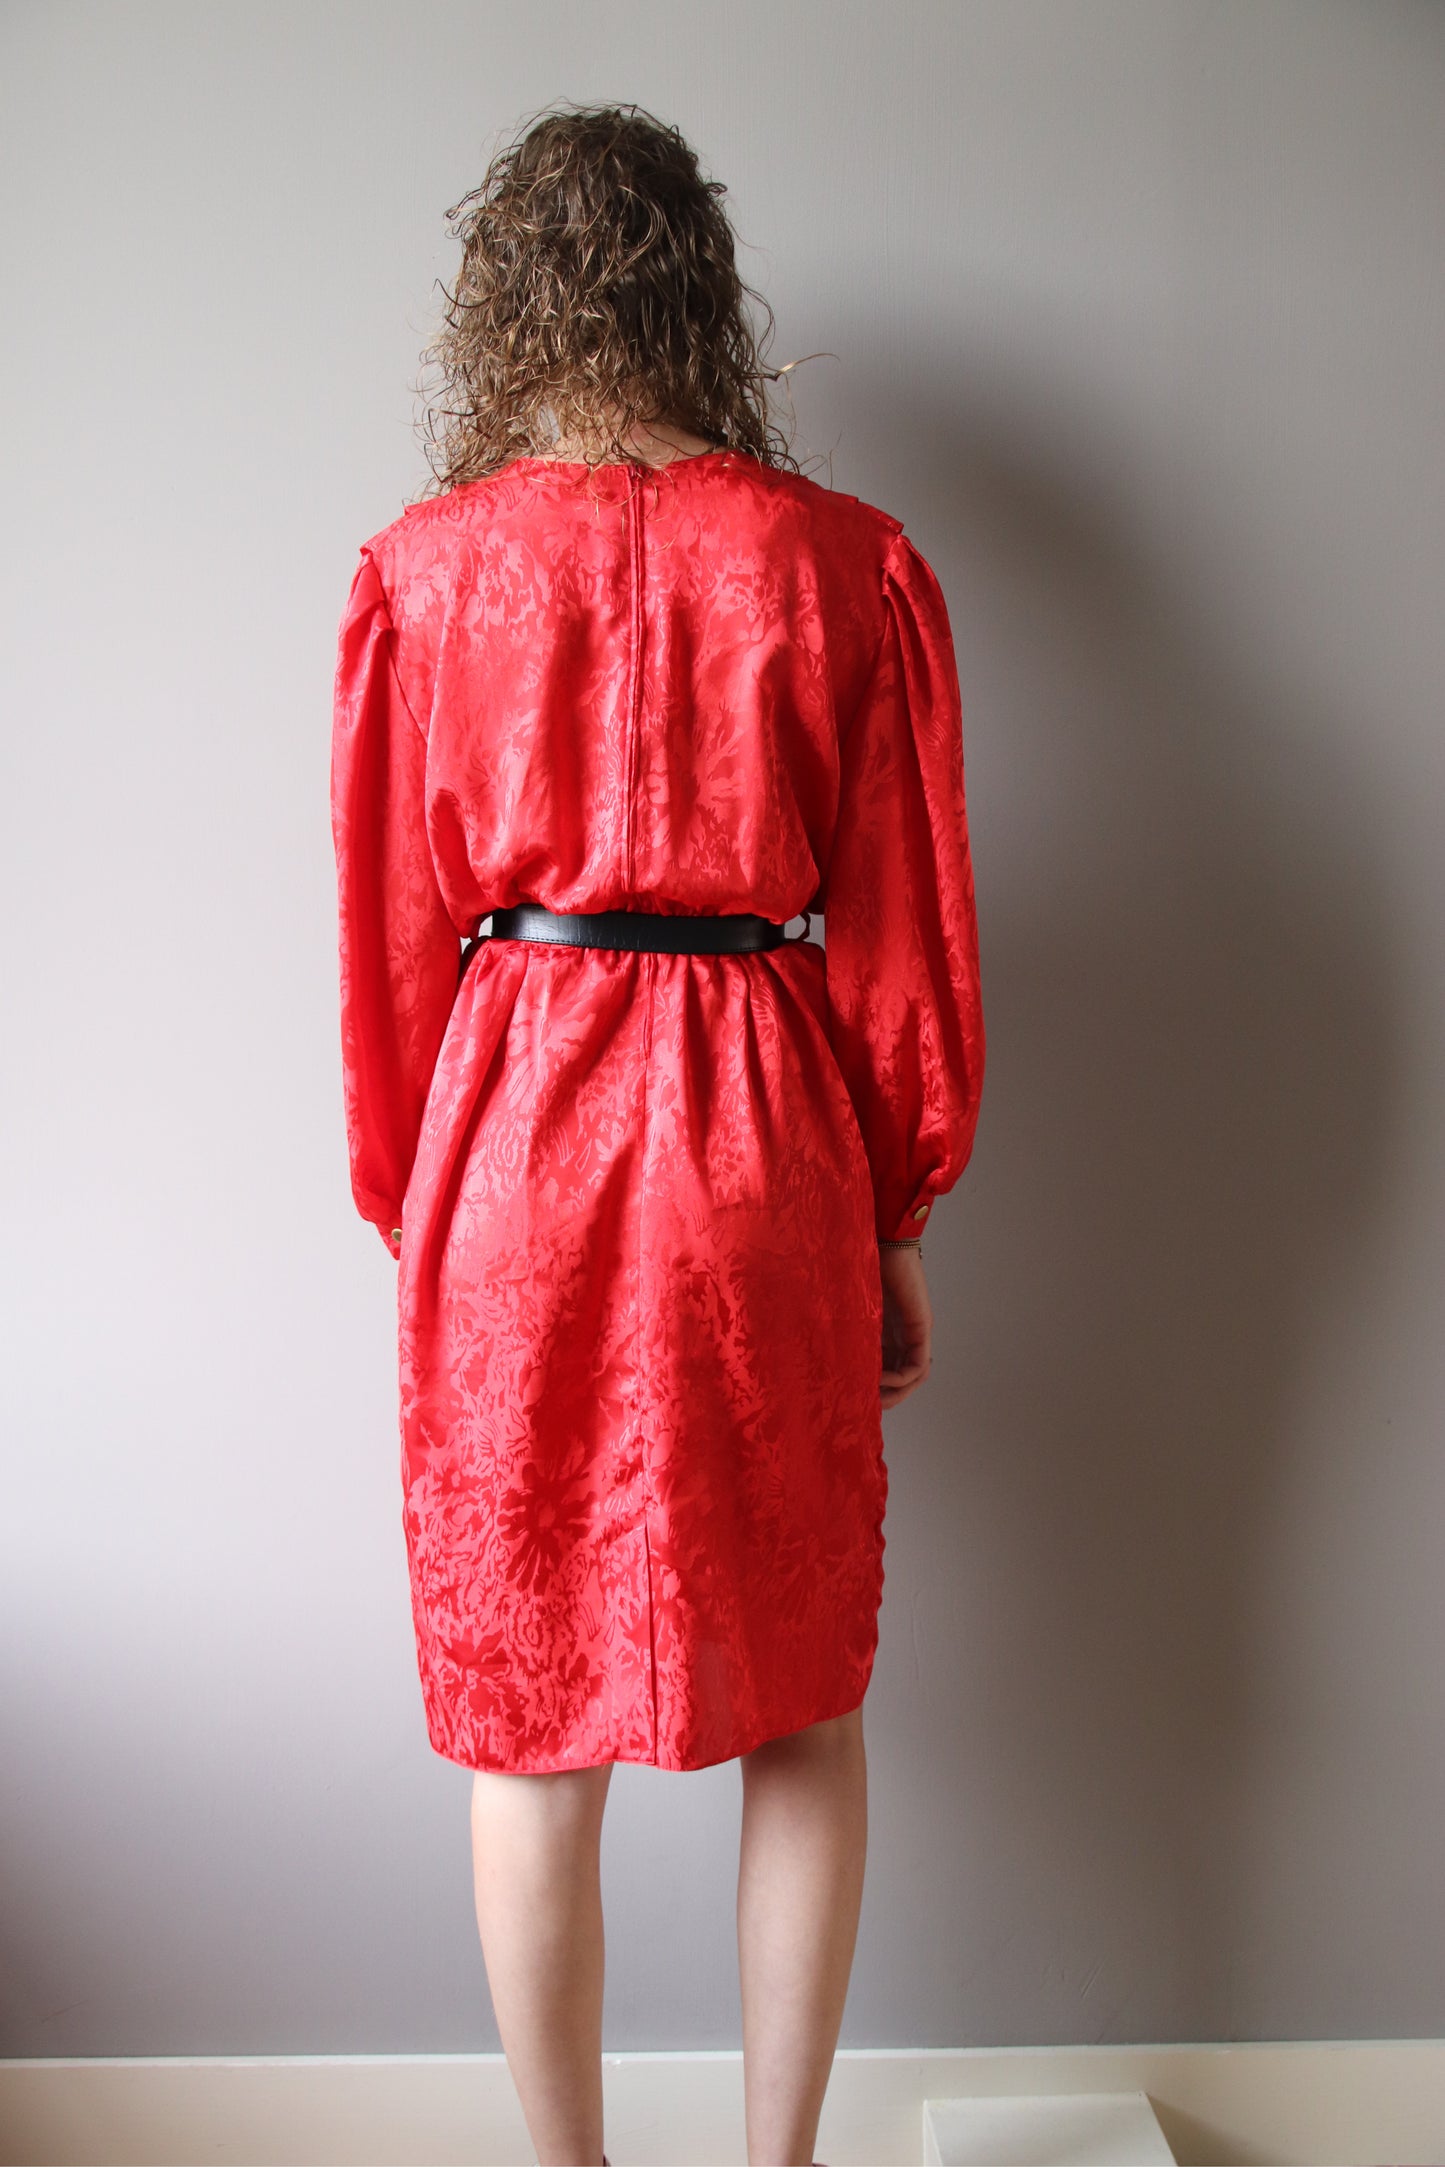 norene red dress - XL